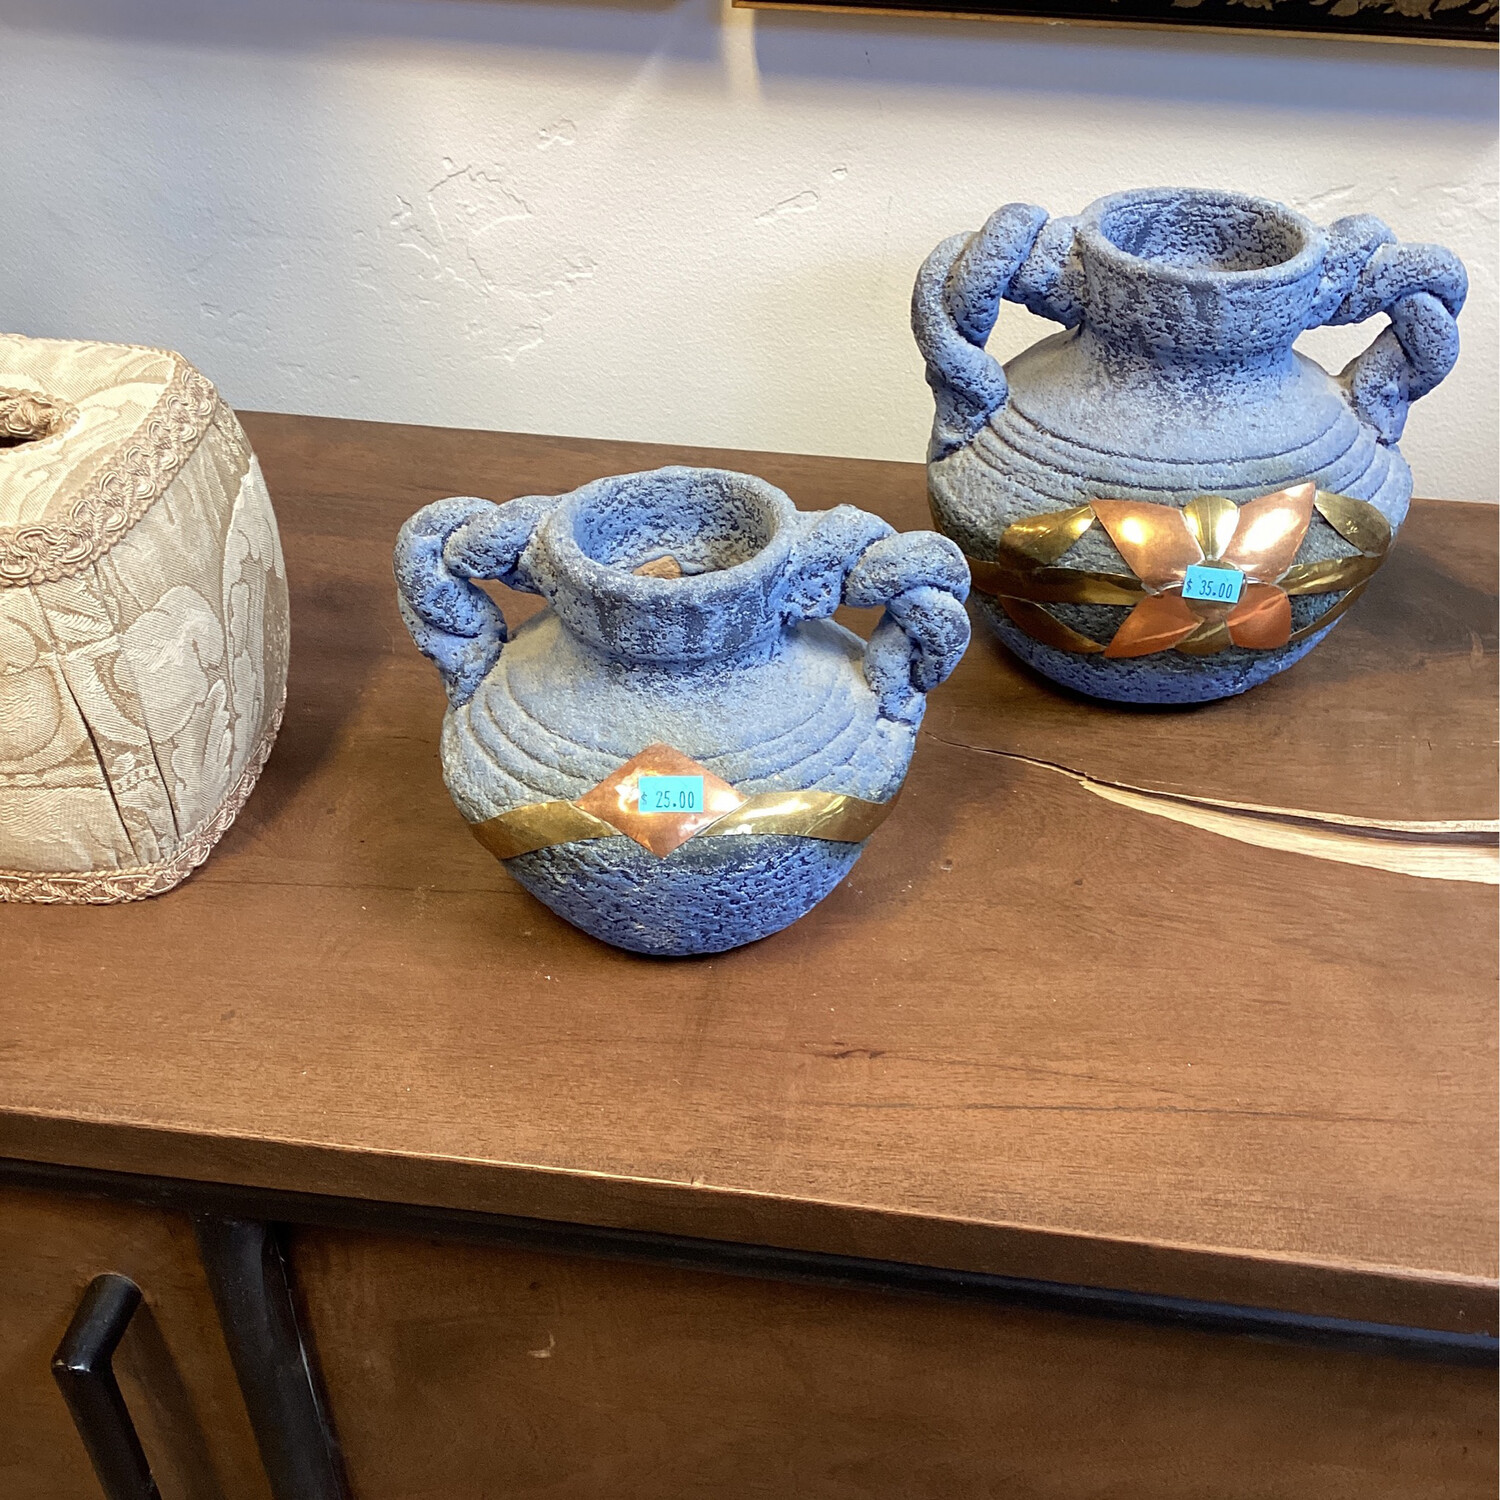 Decorative Blue Vase